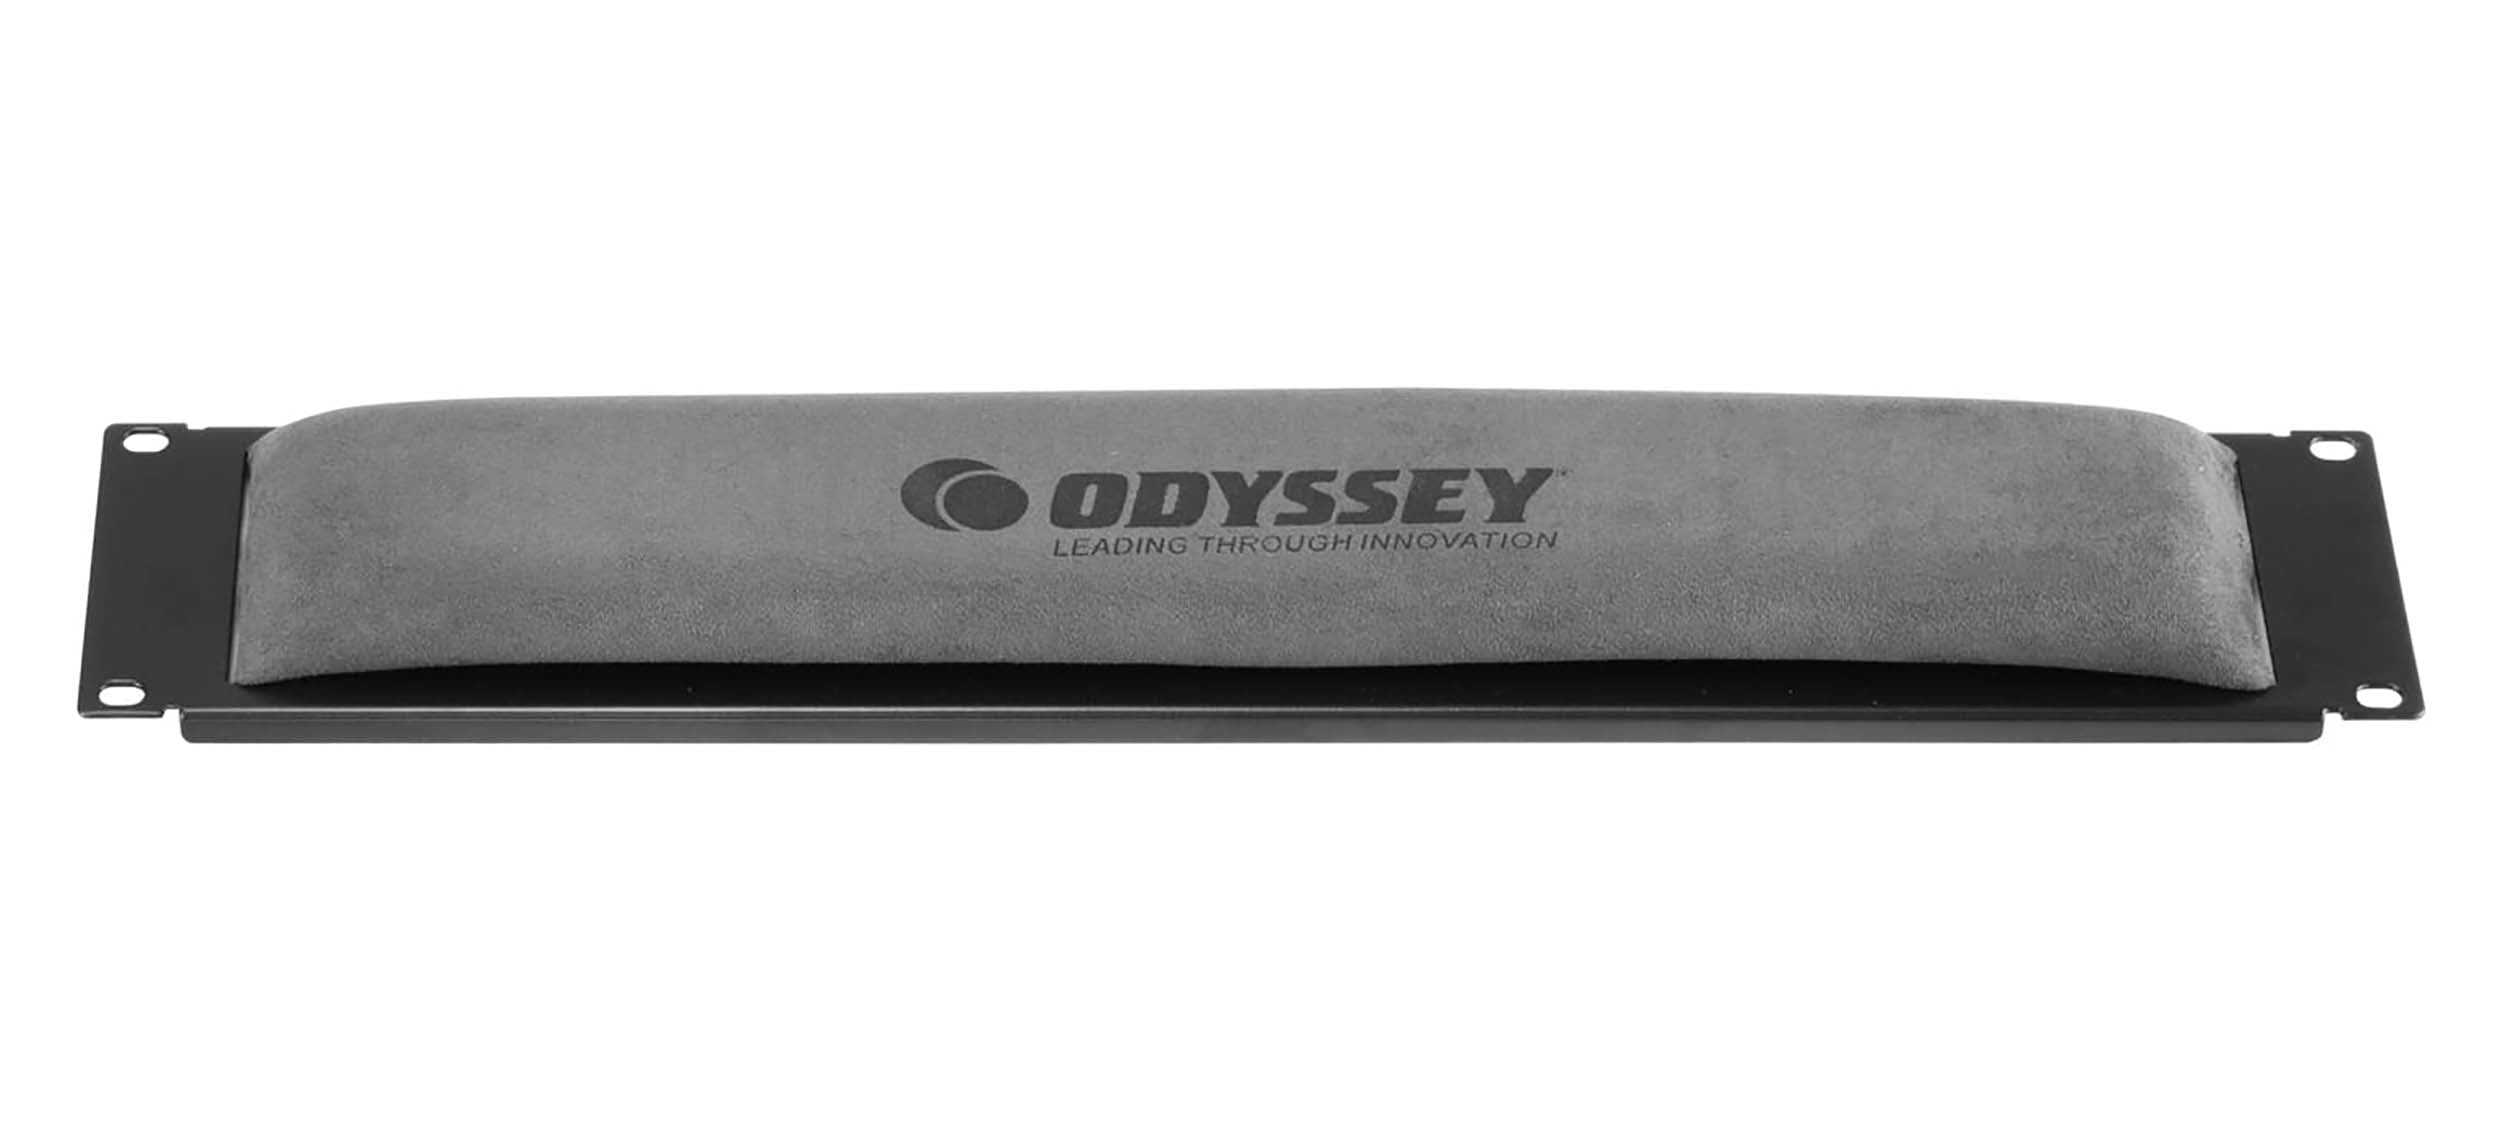 Odyssey ARWRISTCOMFORT2U Comfort Wrist Rest Pad for Rack Cases - 2U Tall by Odyssey